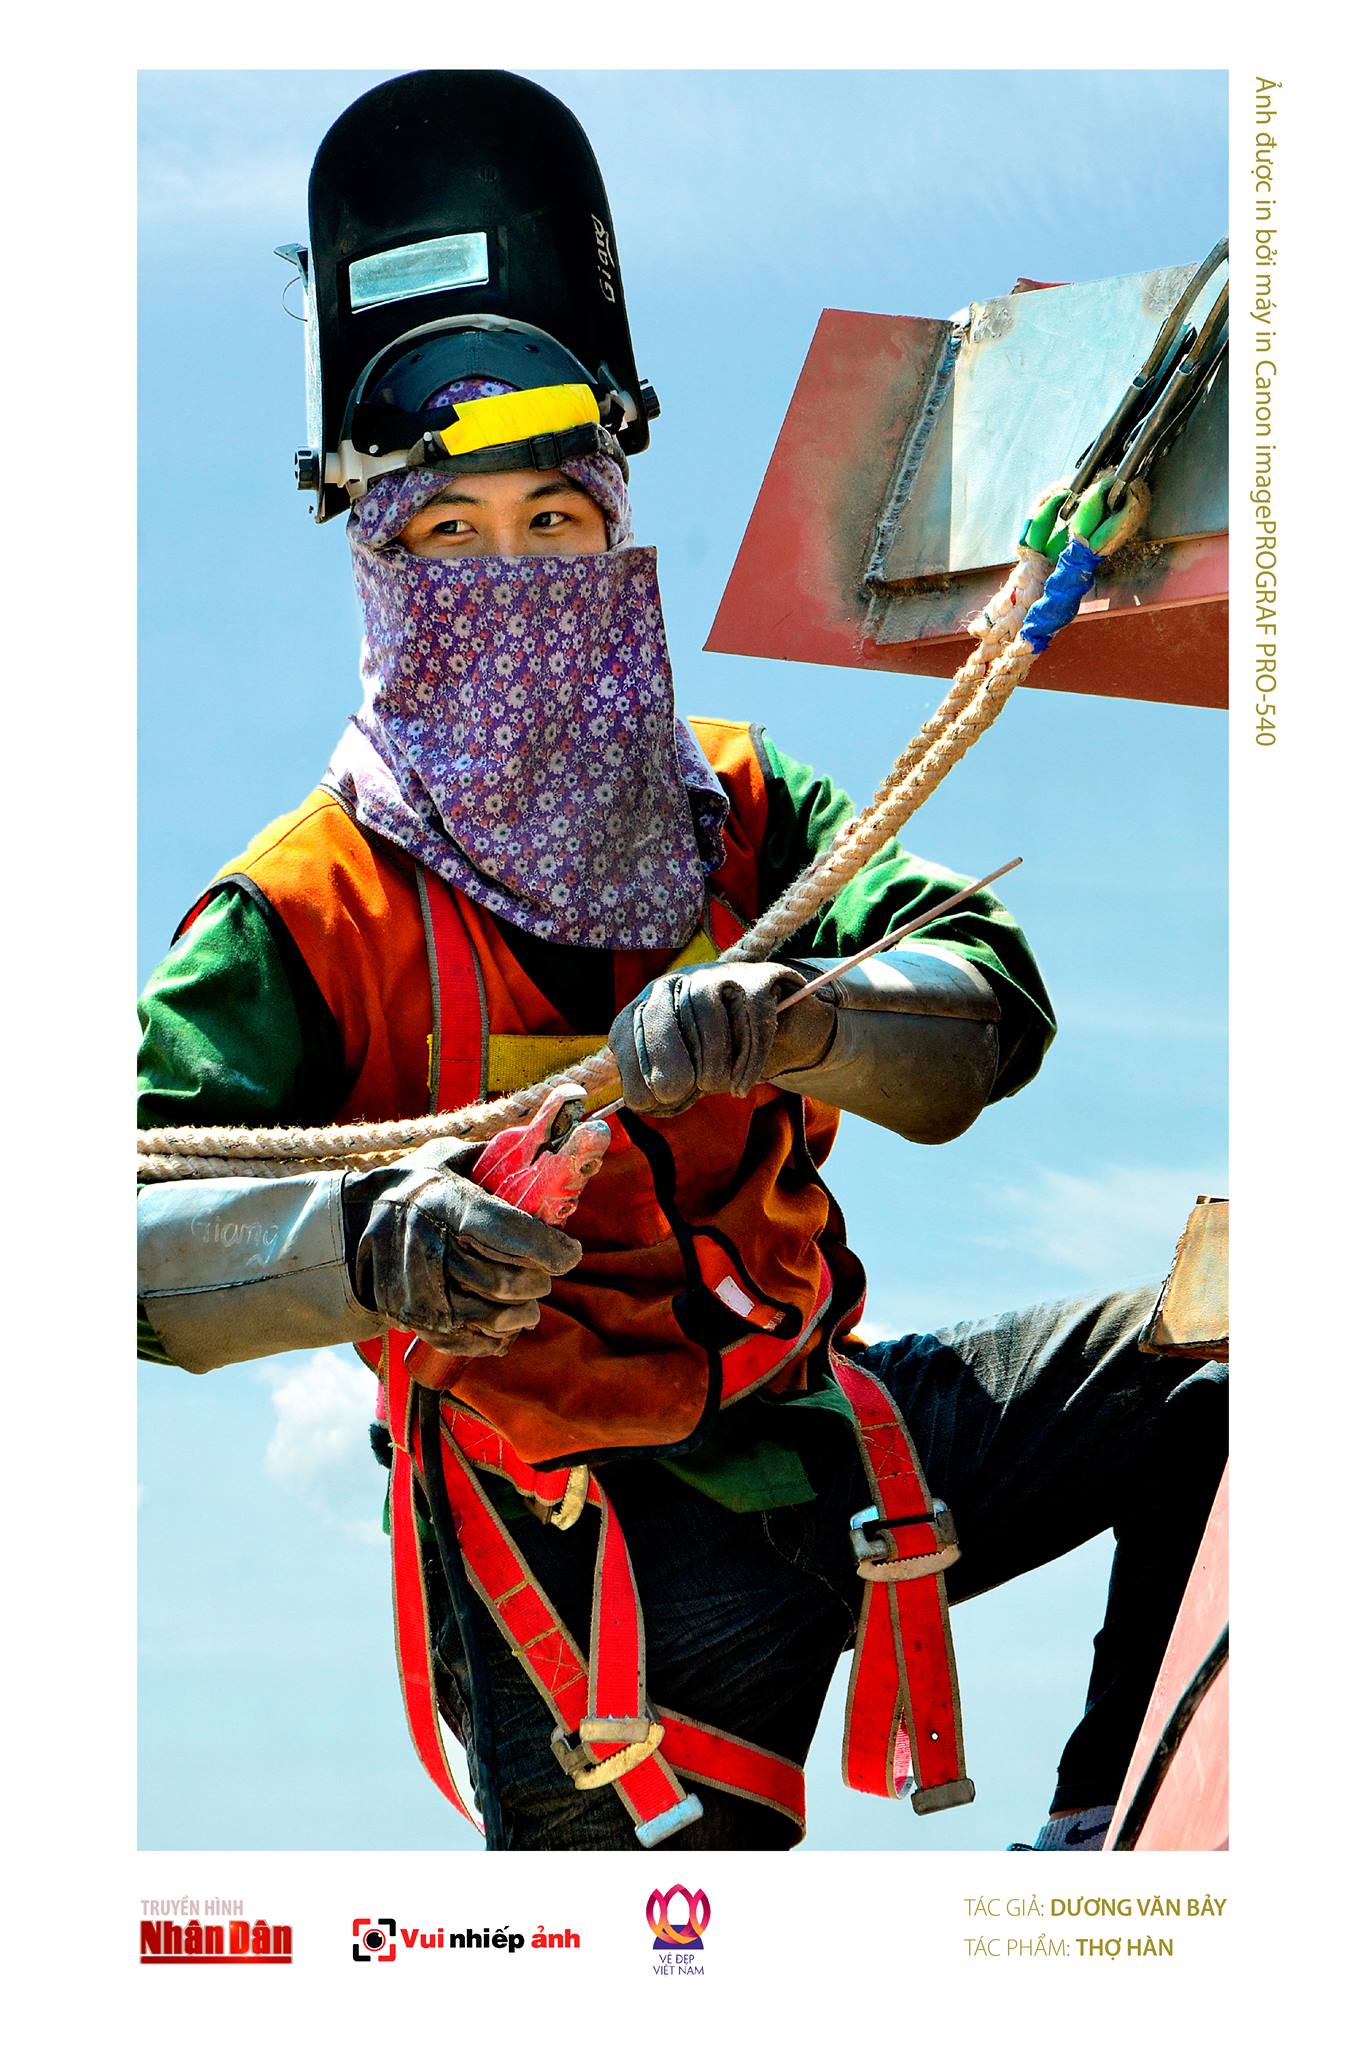 A photo captures a female welder working